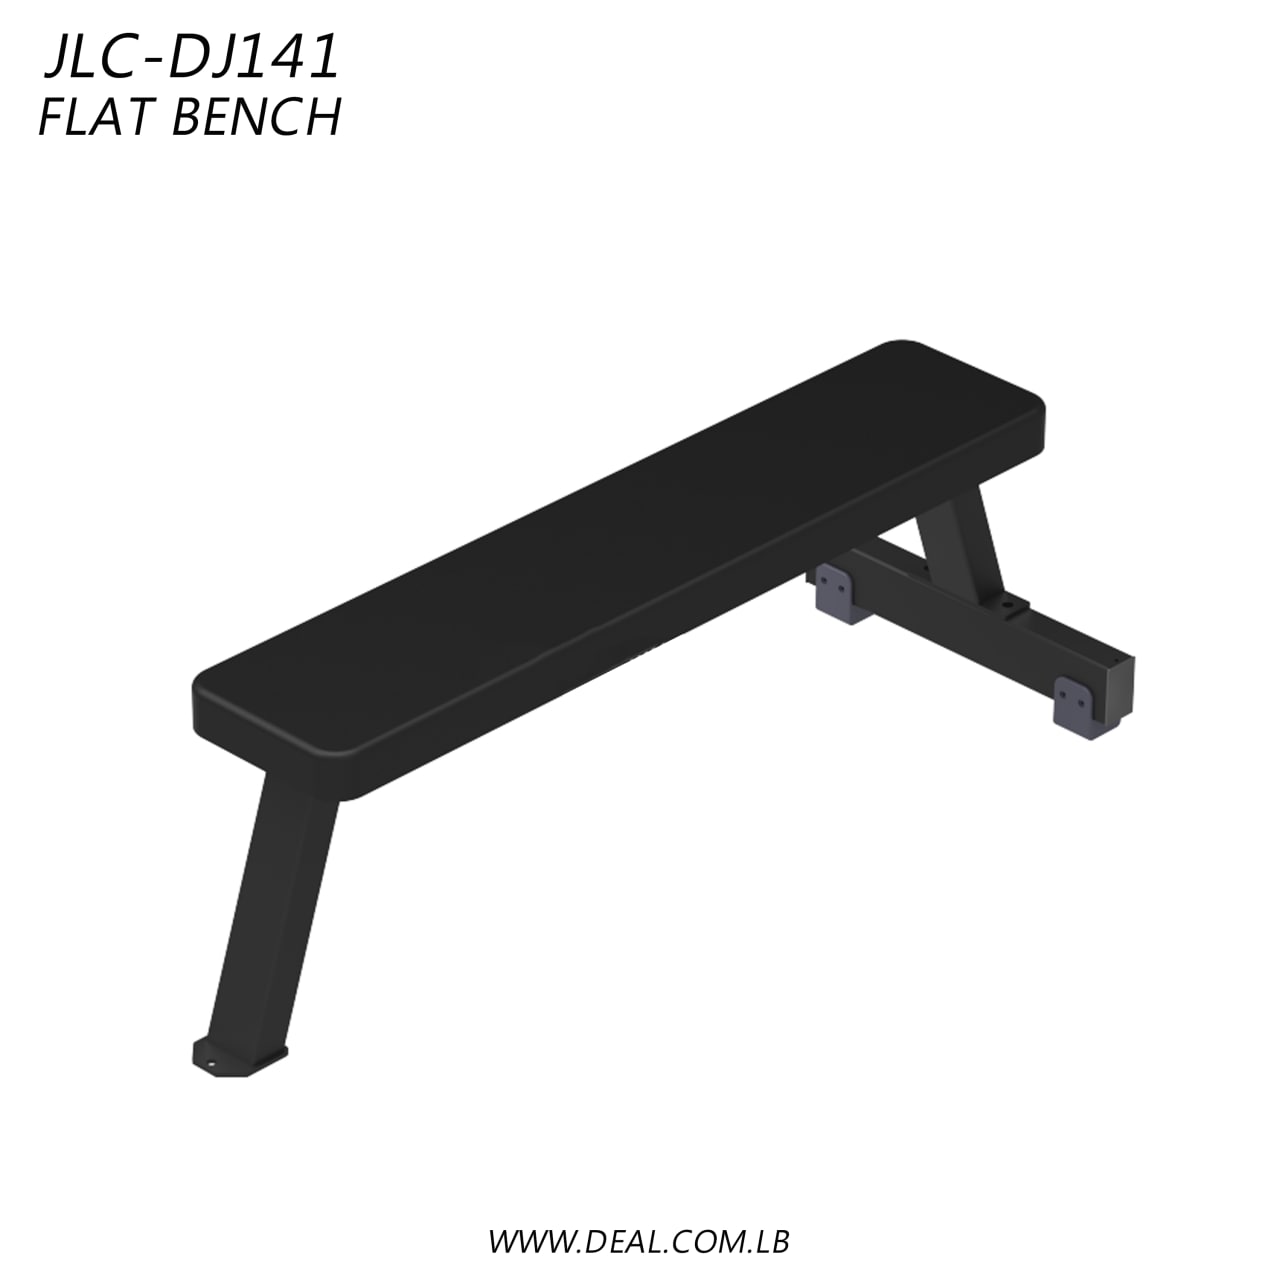 JLC-DJ141+%7C+Flat+bench